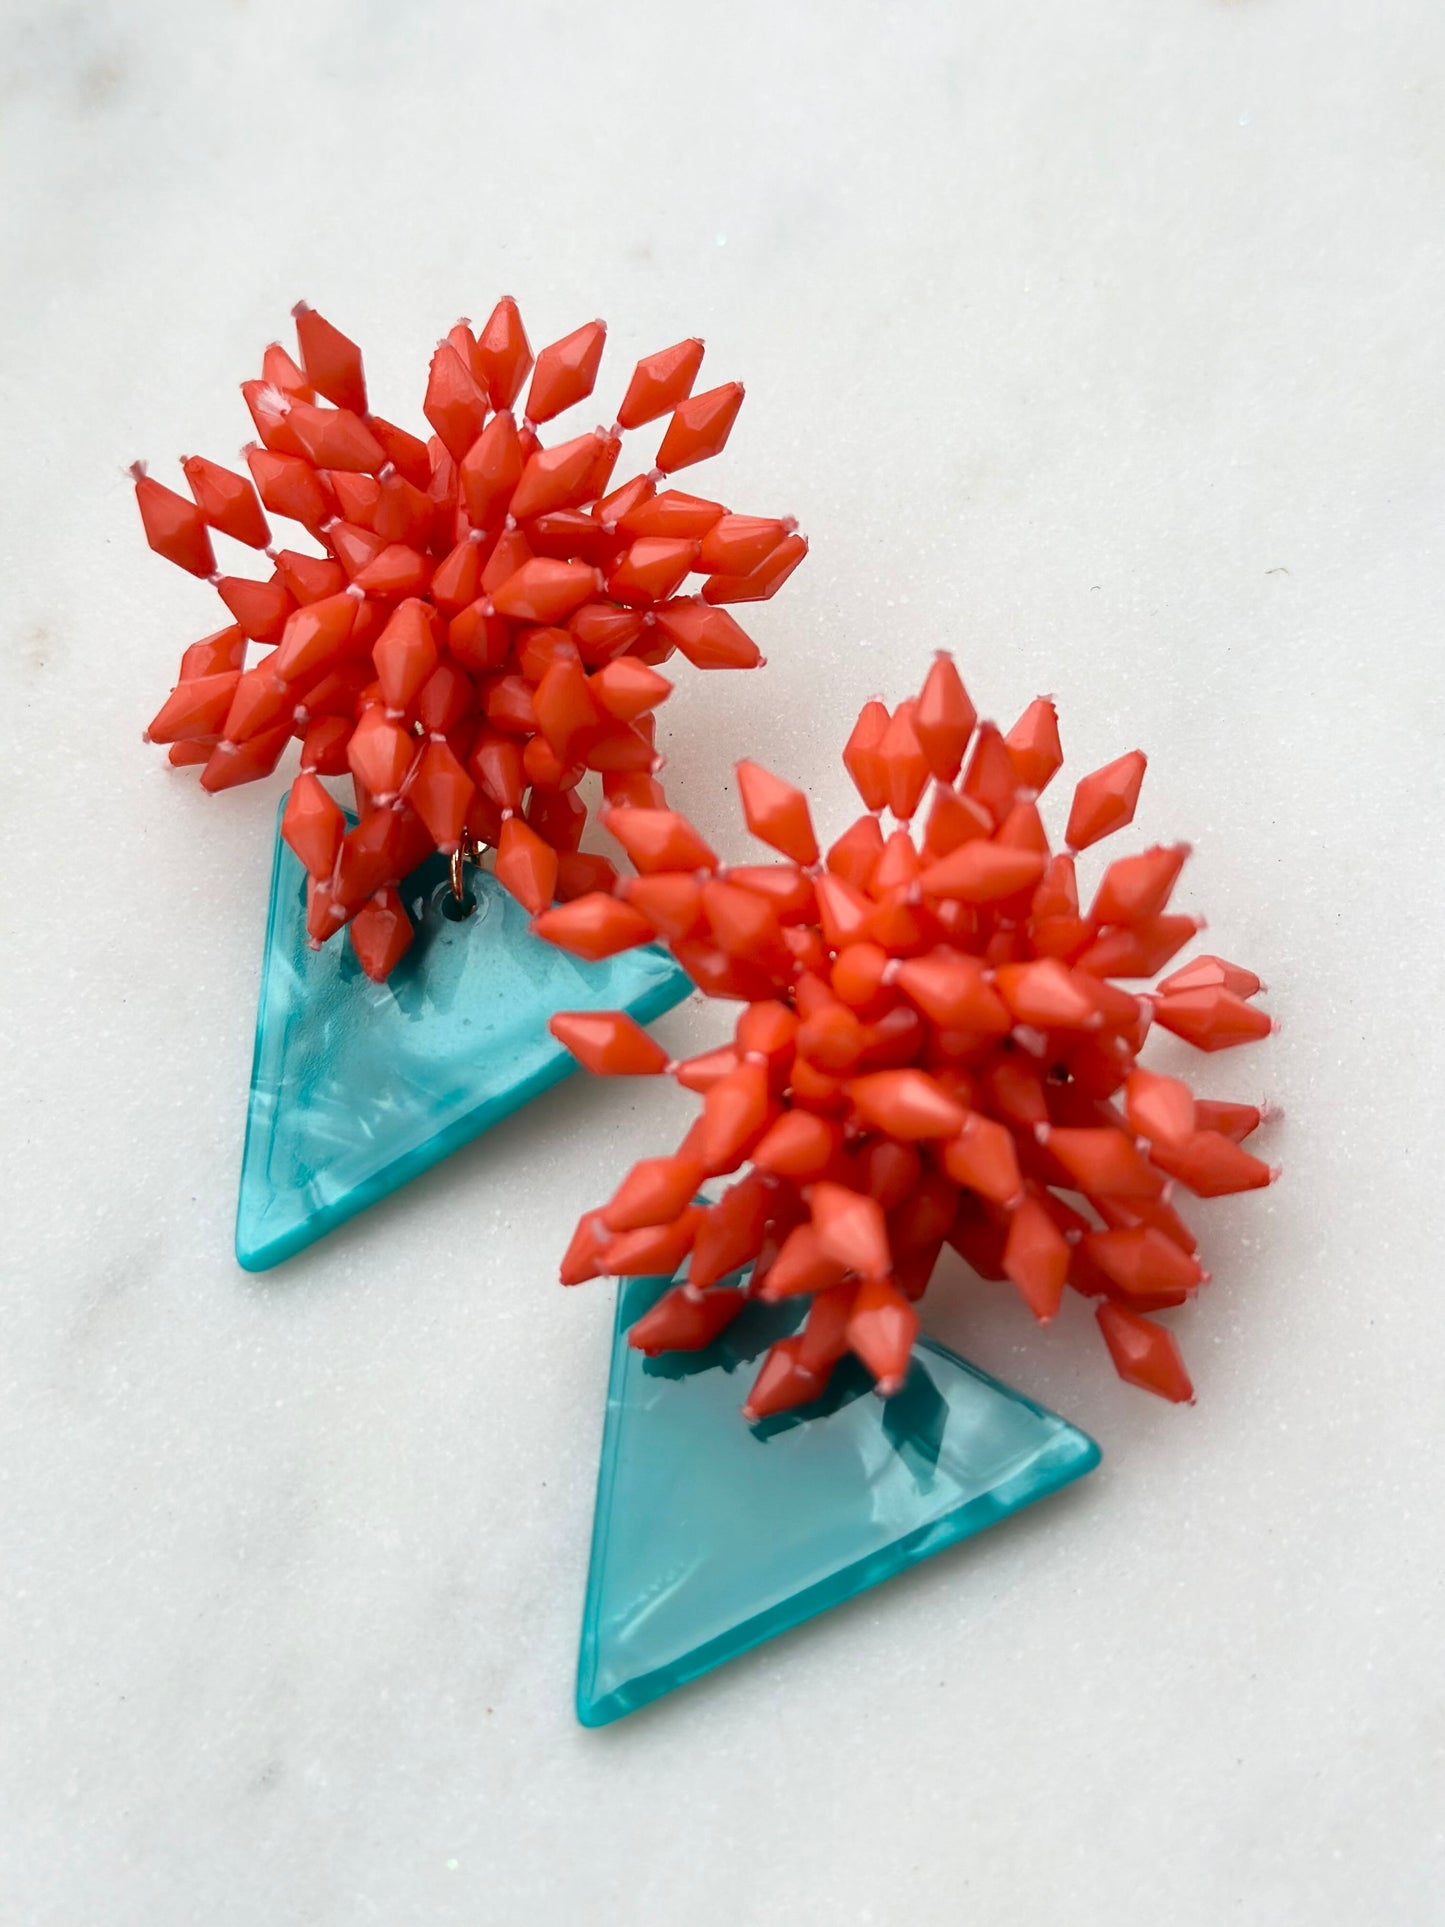 pom pom triangle acrylic earrings